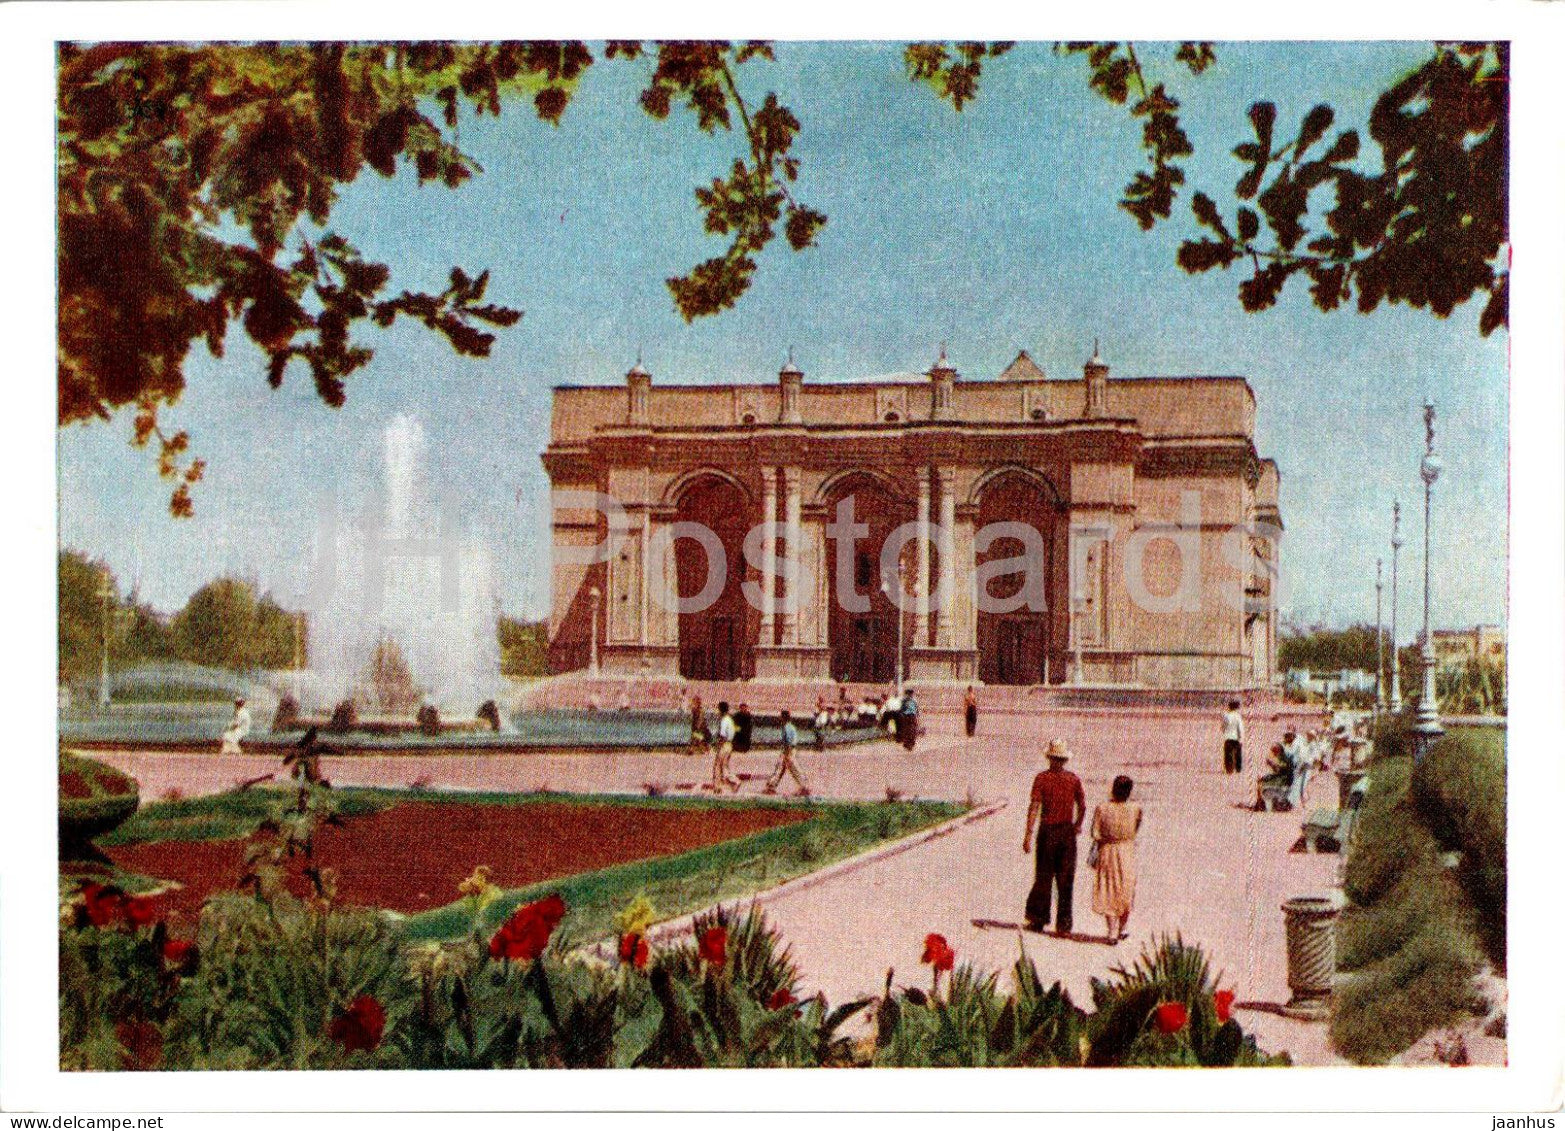 Tashkent - Navoi State Opera and Ballet Theatre - old postcard - 1957 - Uzbekistan USSR - unused - JH Postcards